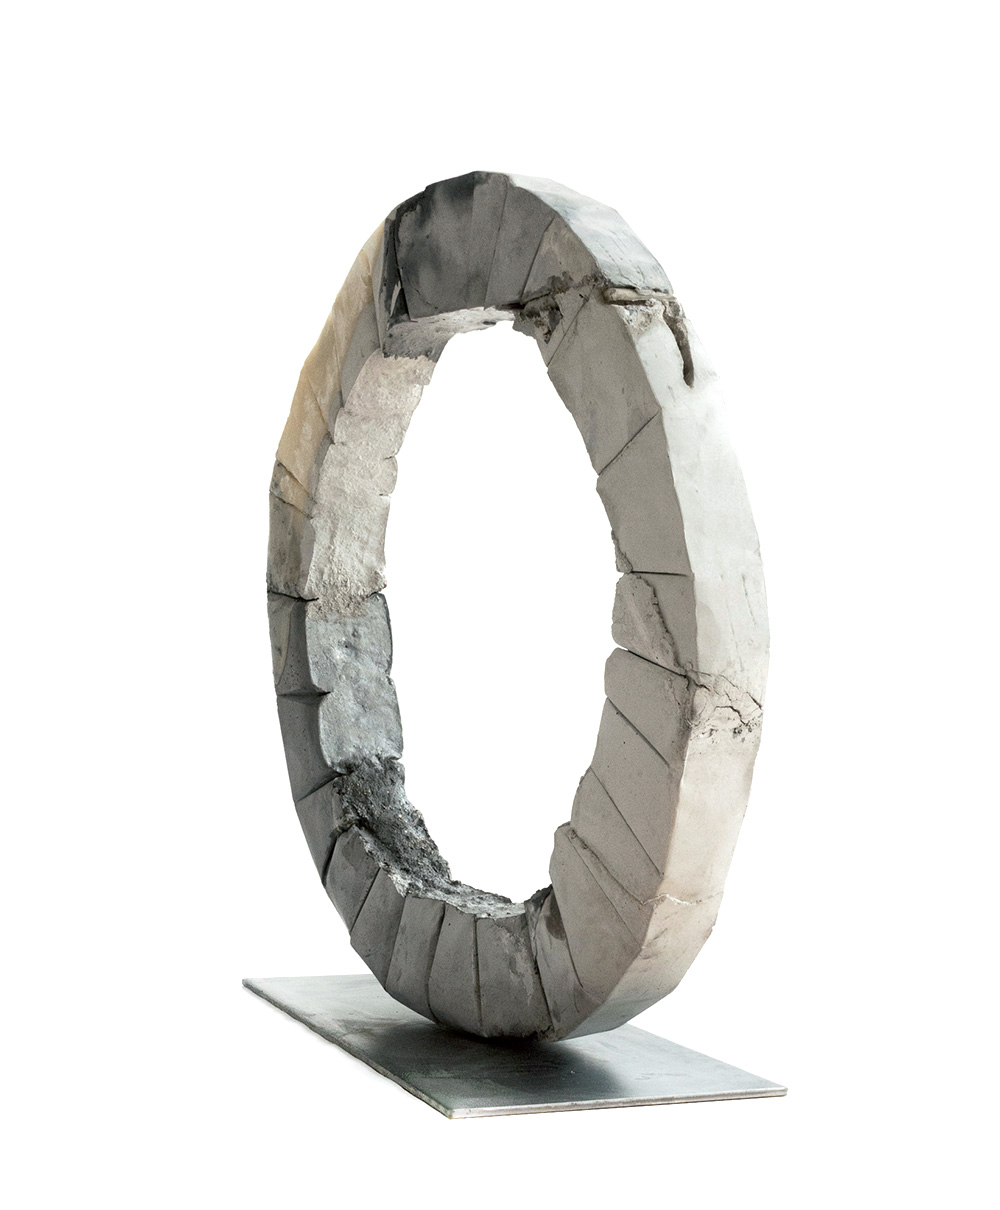 Rundling | 2014 | Beton, Wachs, Stahl | 85 x 12 cm, Sockel 30 x 80 cm